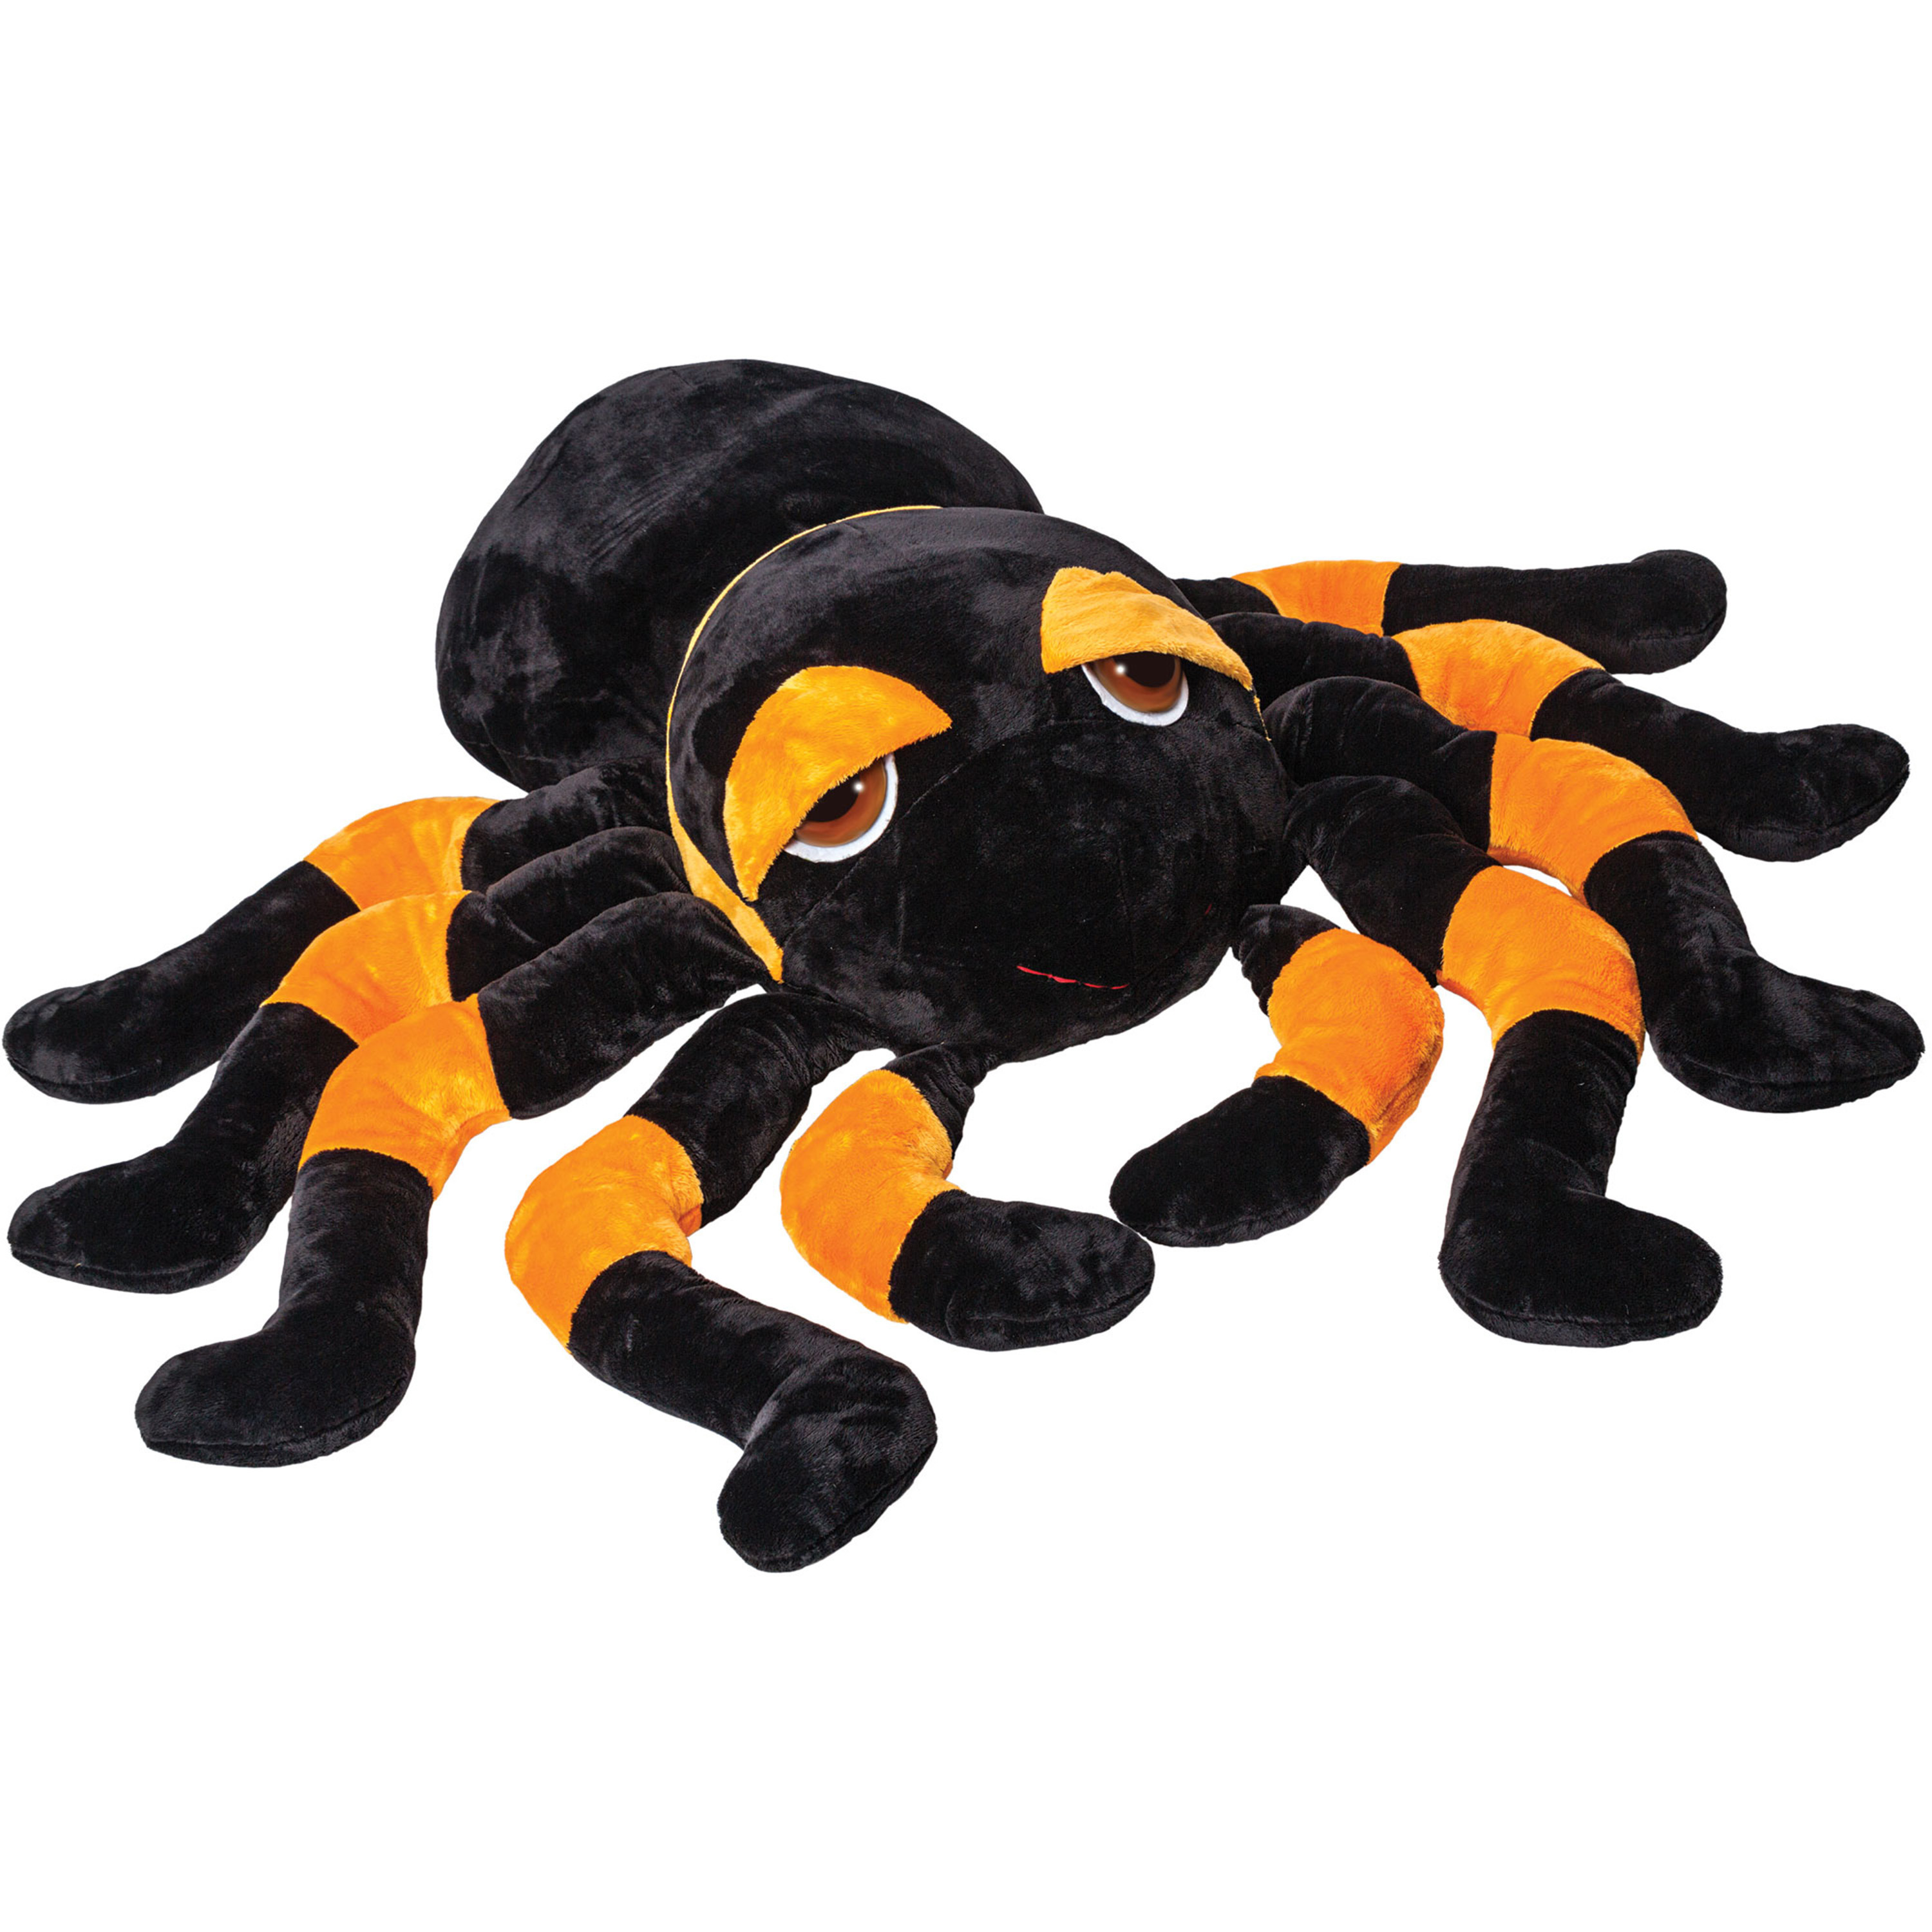 Suki Gifts Pluche knuffel spin - tarantula - zwart/oranje - 82 cm - XXL-size -